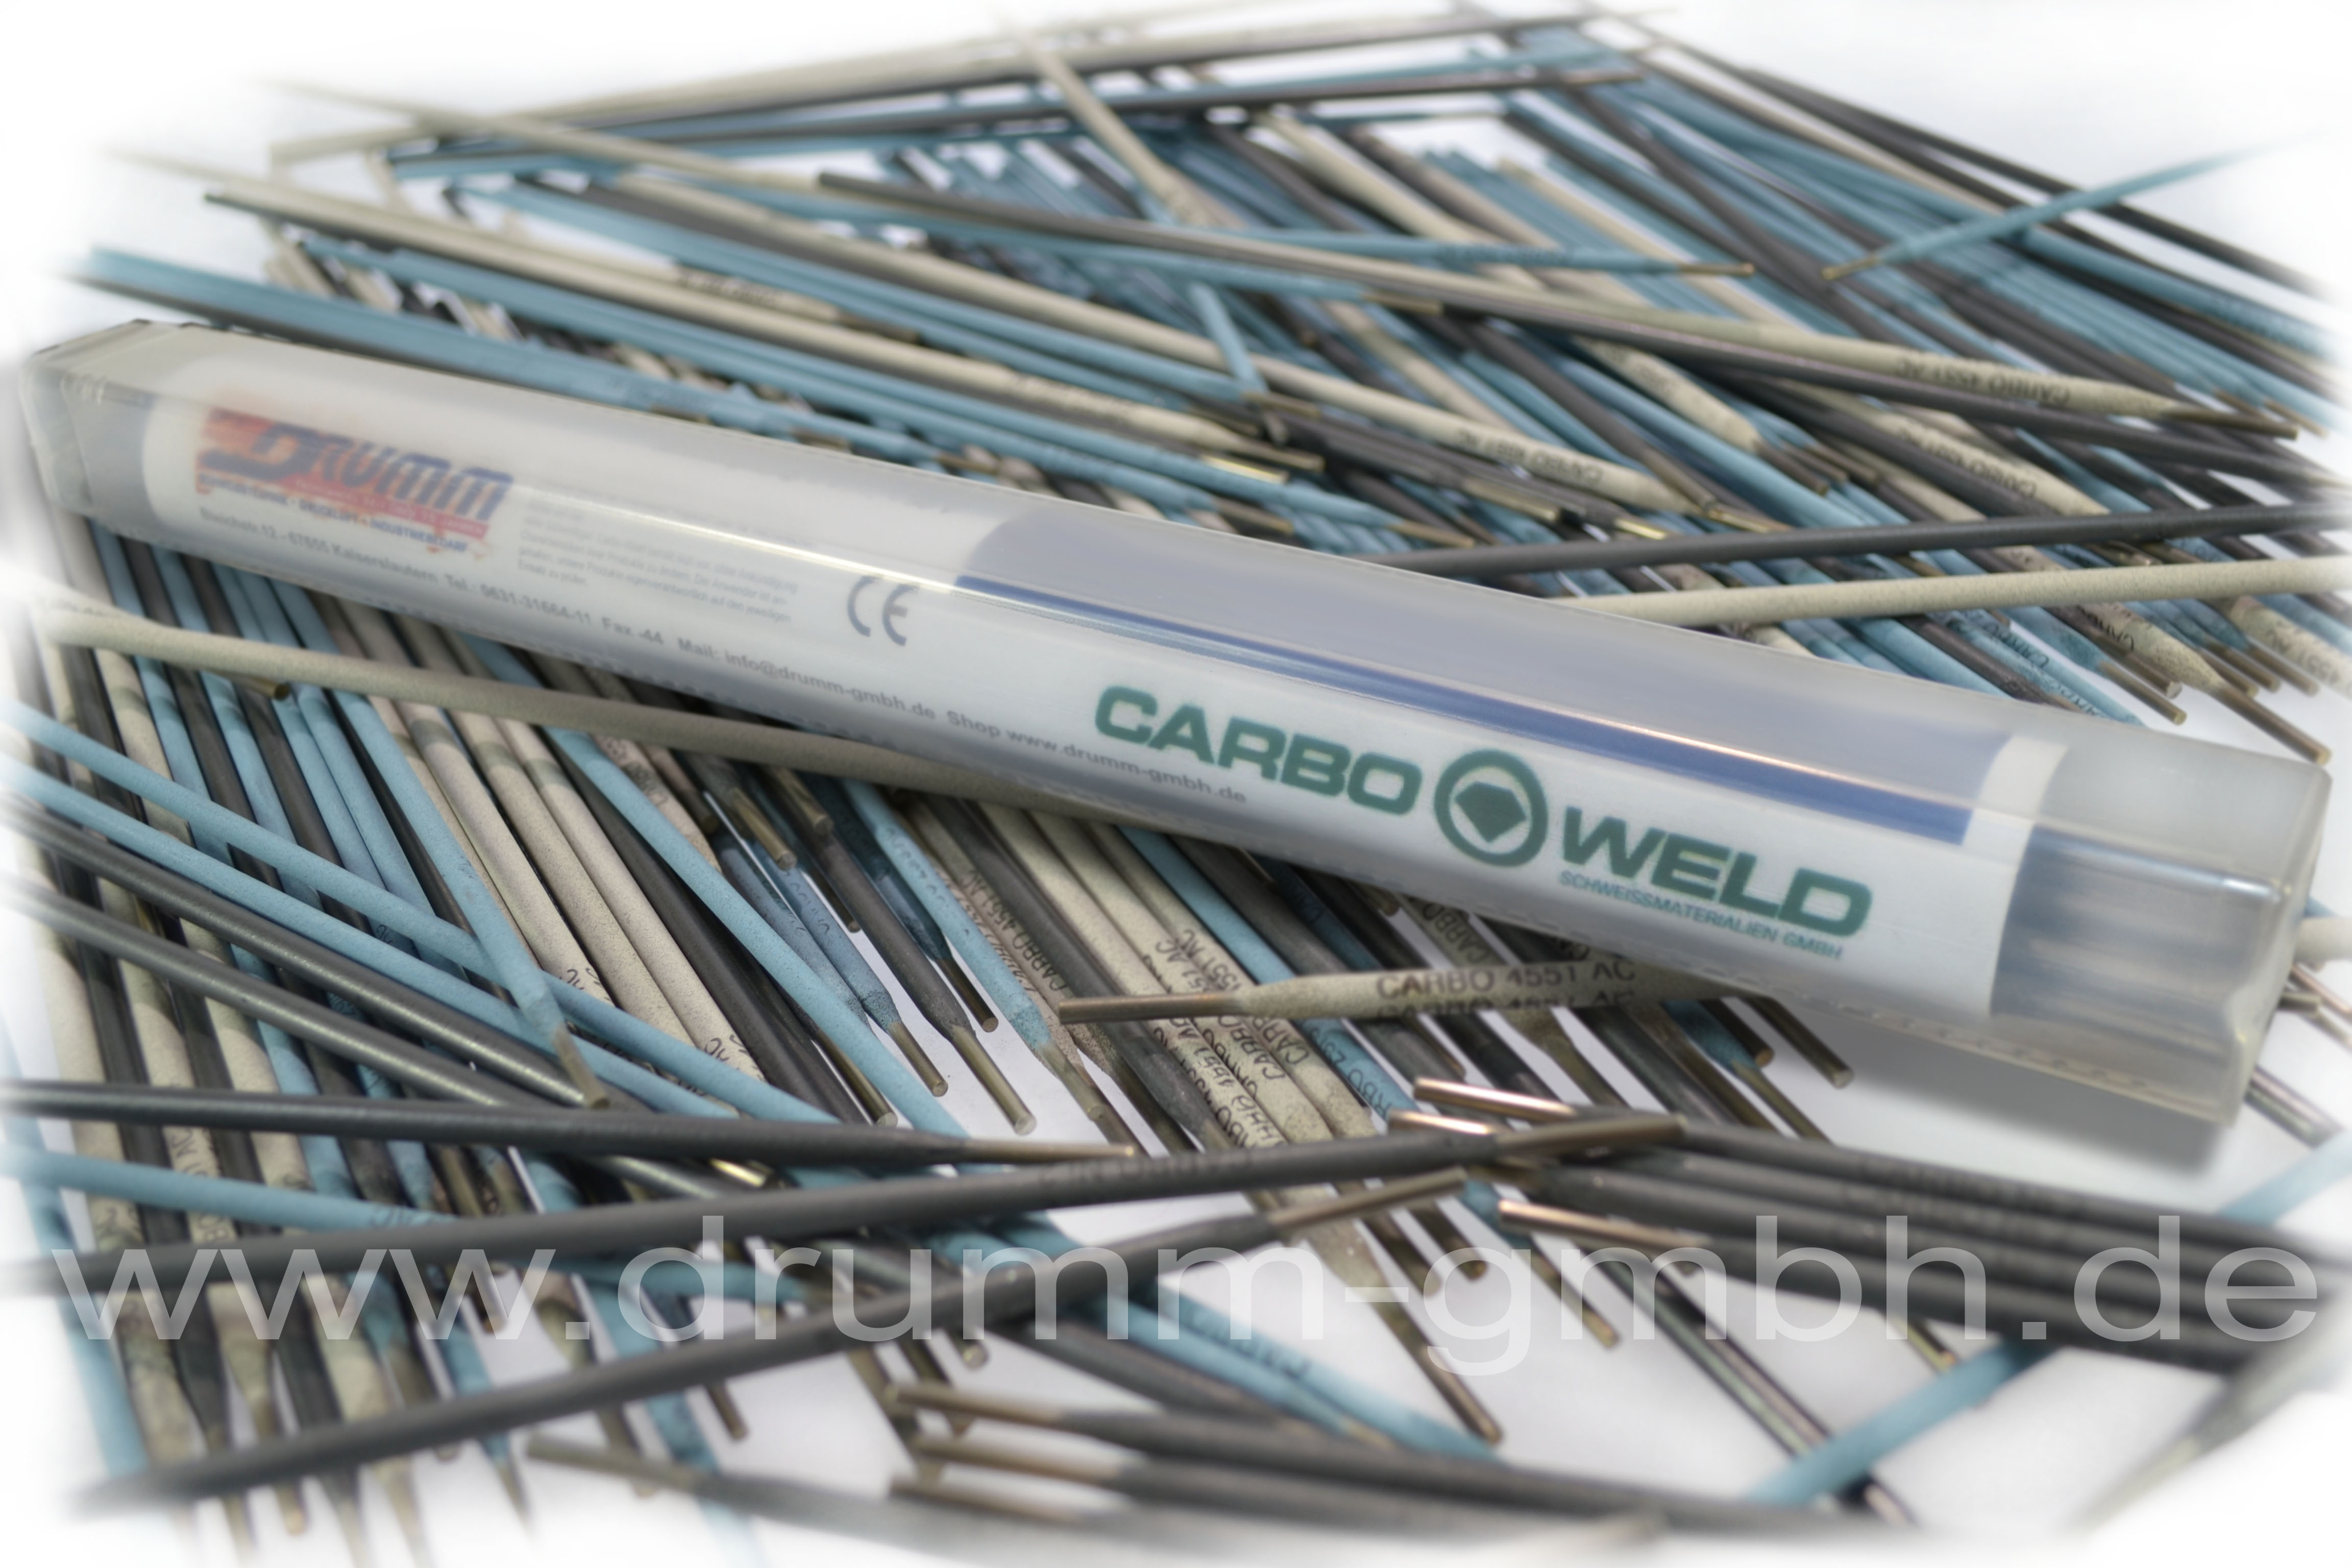 Stabelektroden Carbo Weld 29/9 AC, Maße 2,5 x 300 mm, 10 Stück.